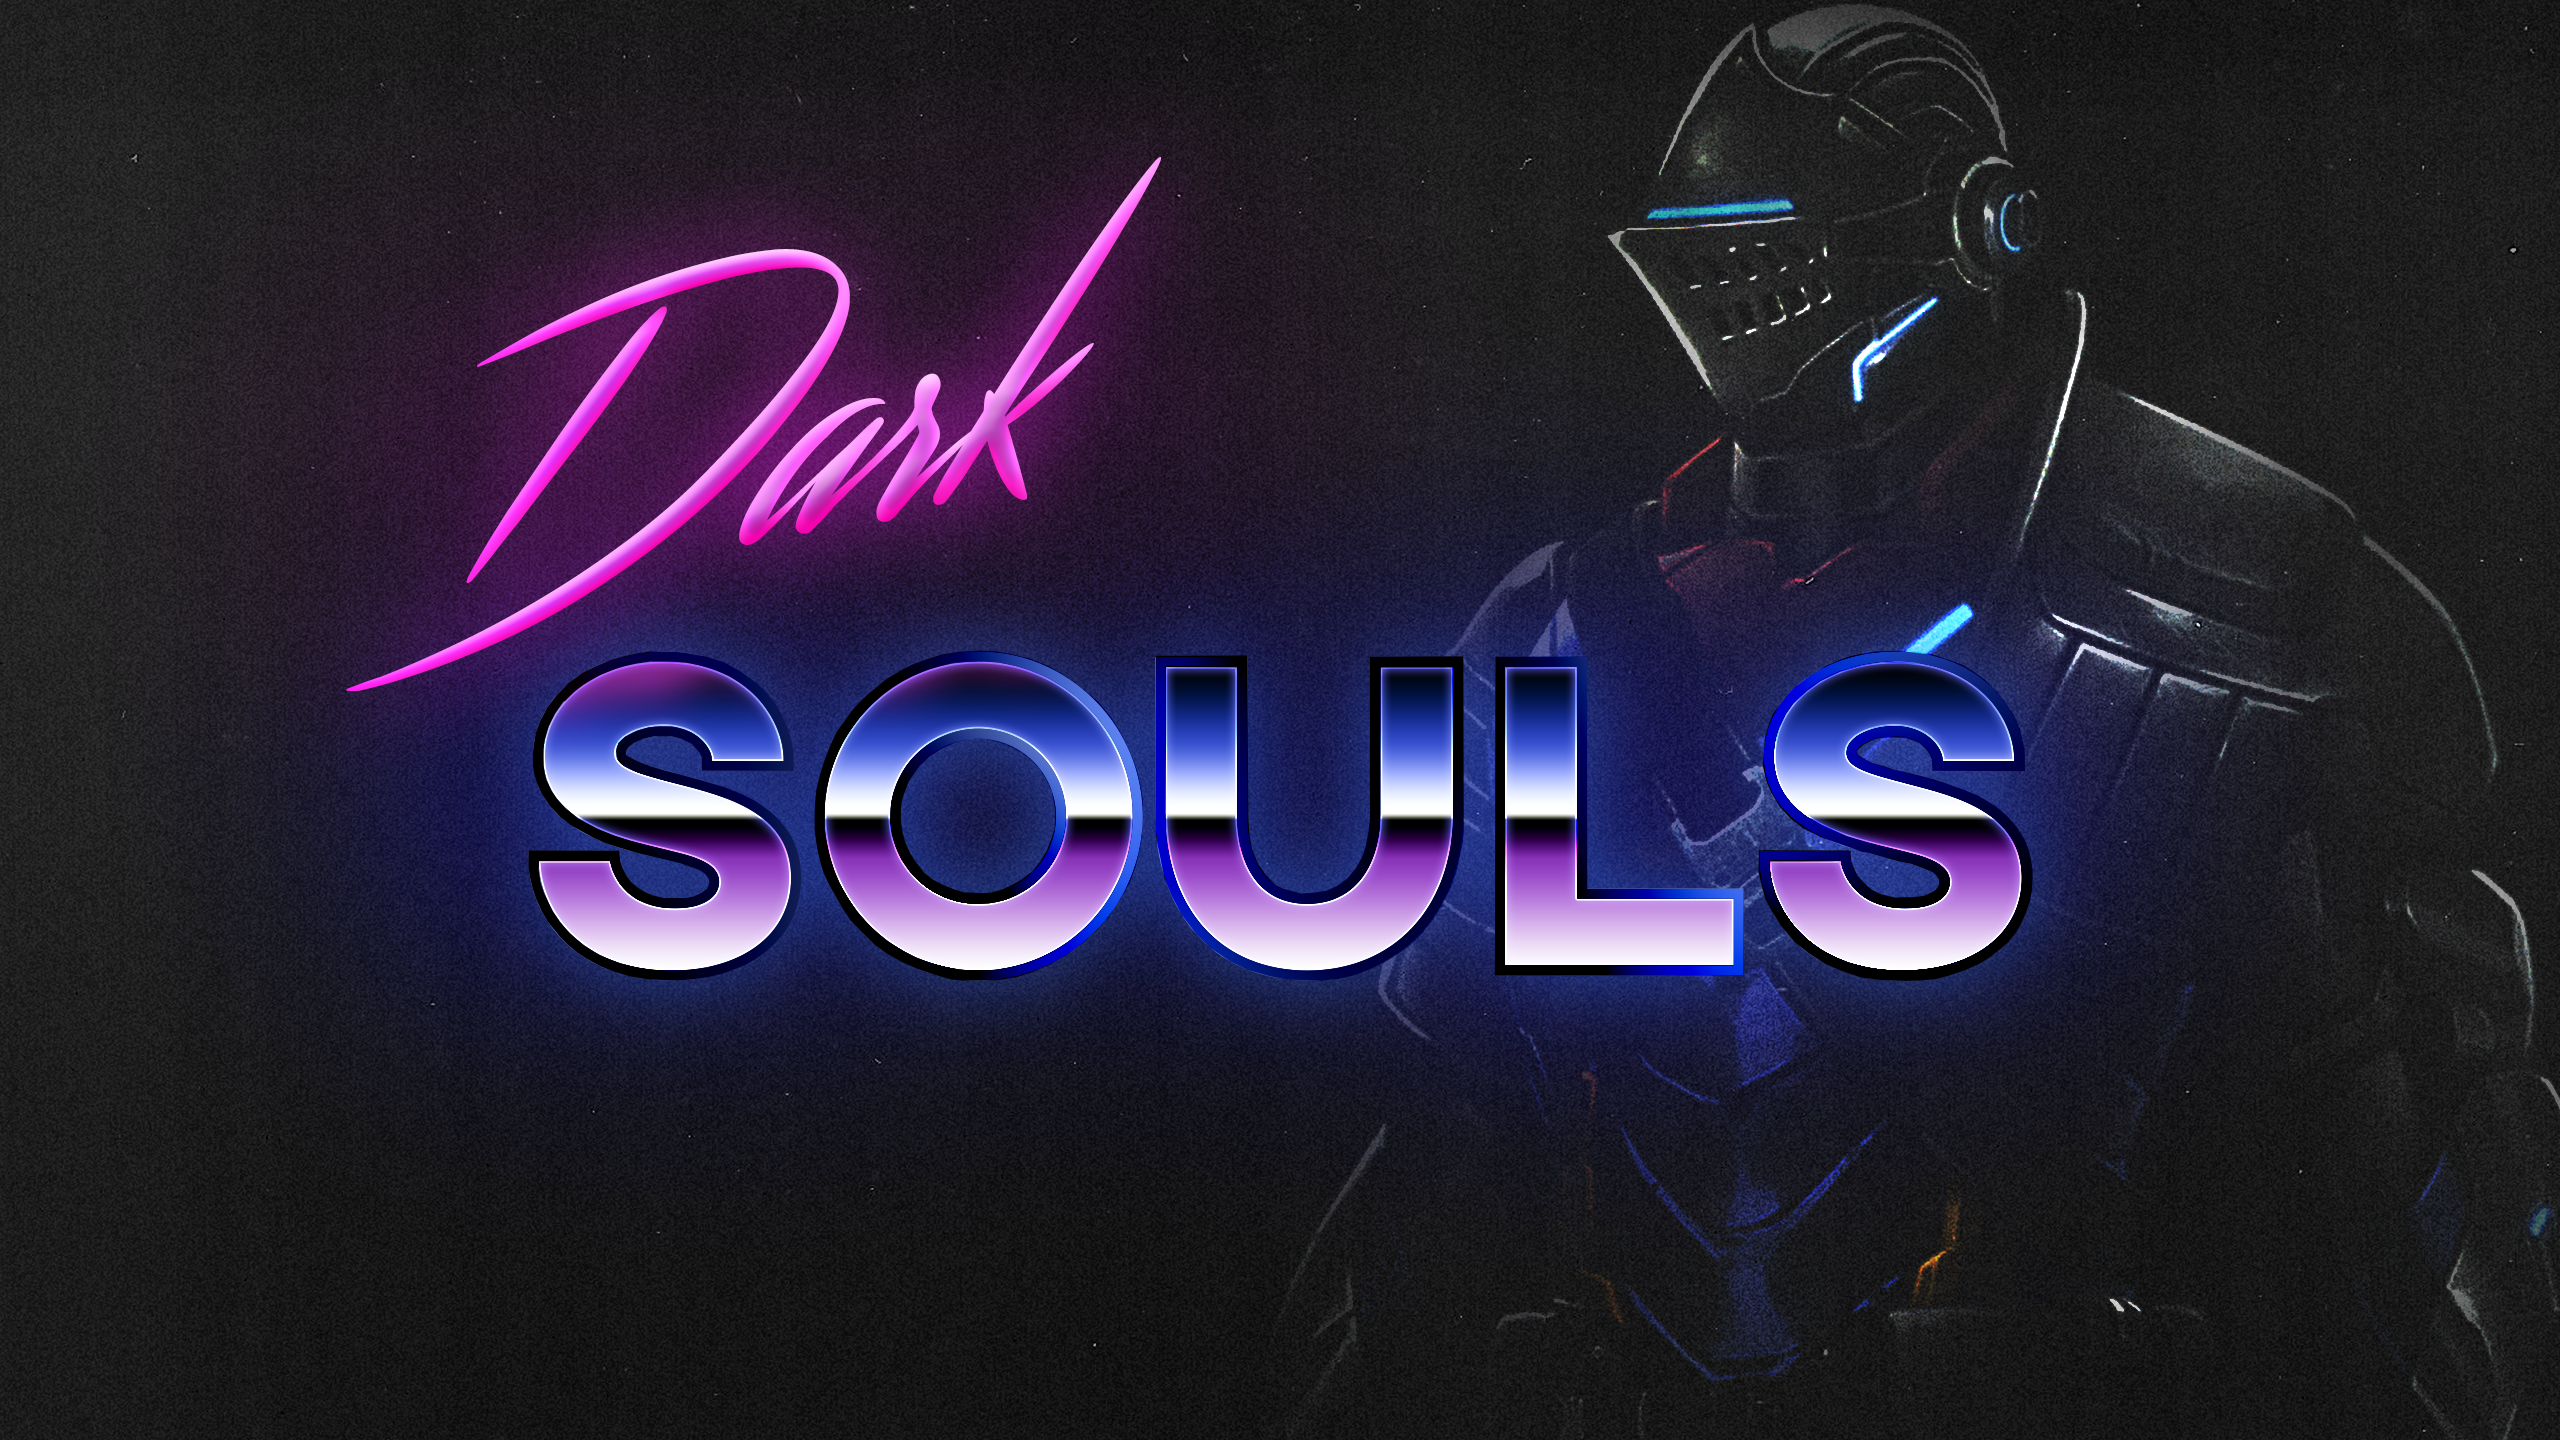 General 2560x1440 digital art artwork Dark Souls video games Dark Souls III armor neon video game art From Software